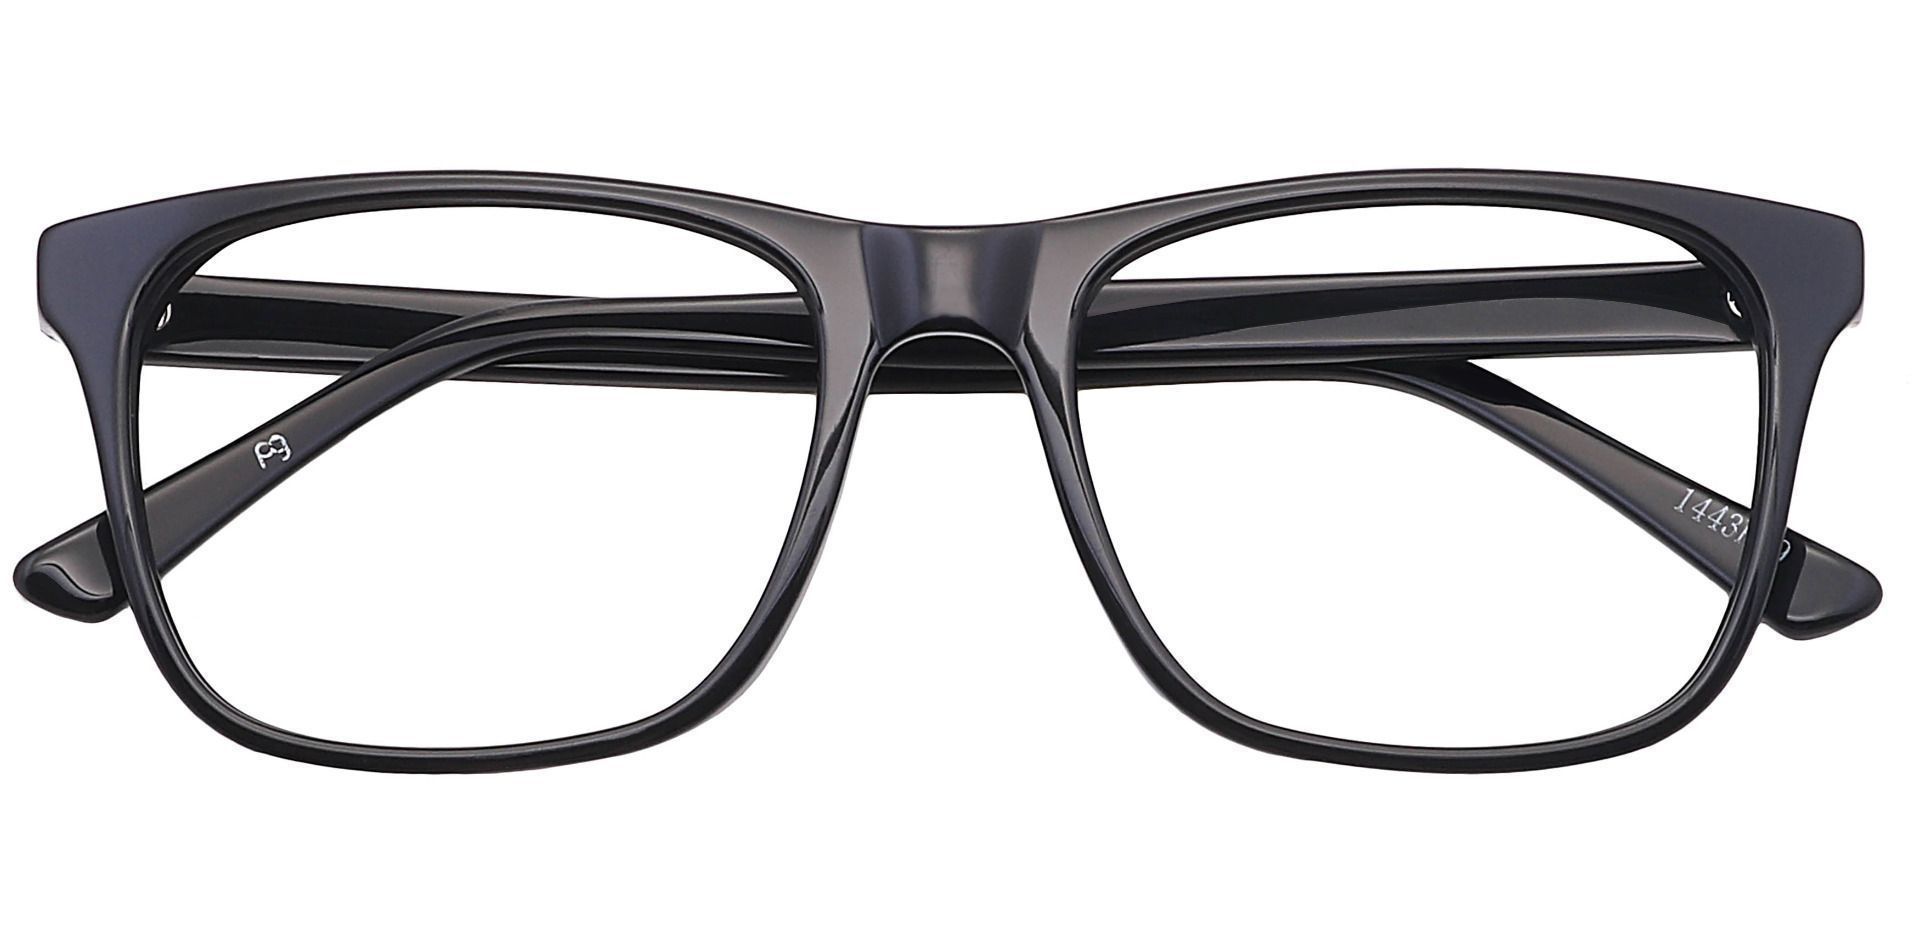 Cantina Square Eyeglasses Frame - Black